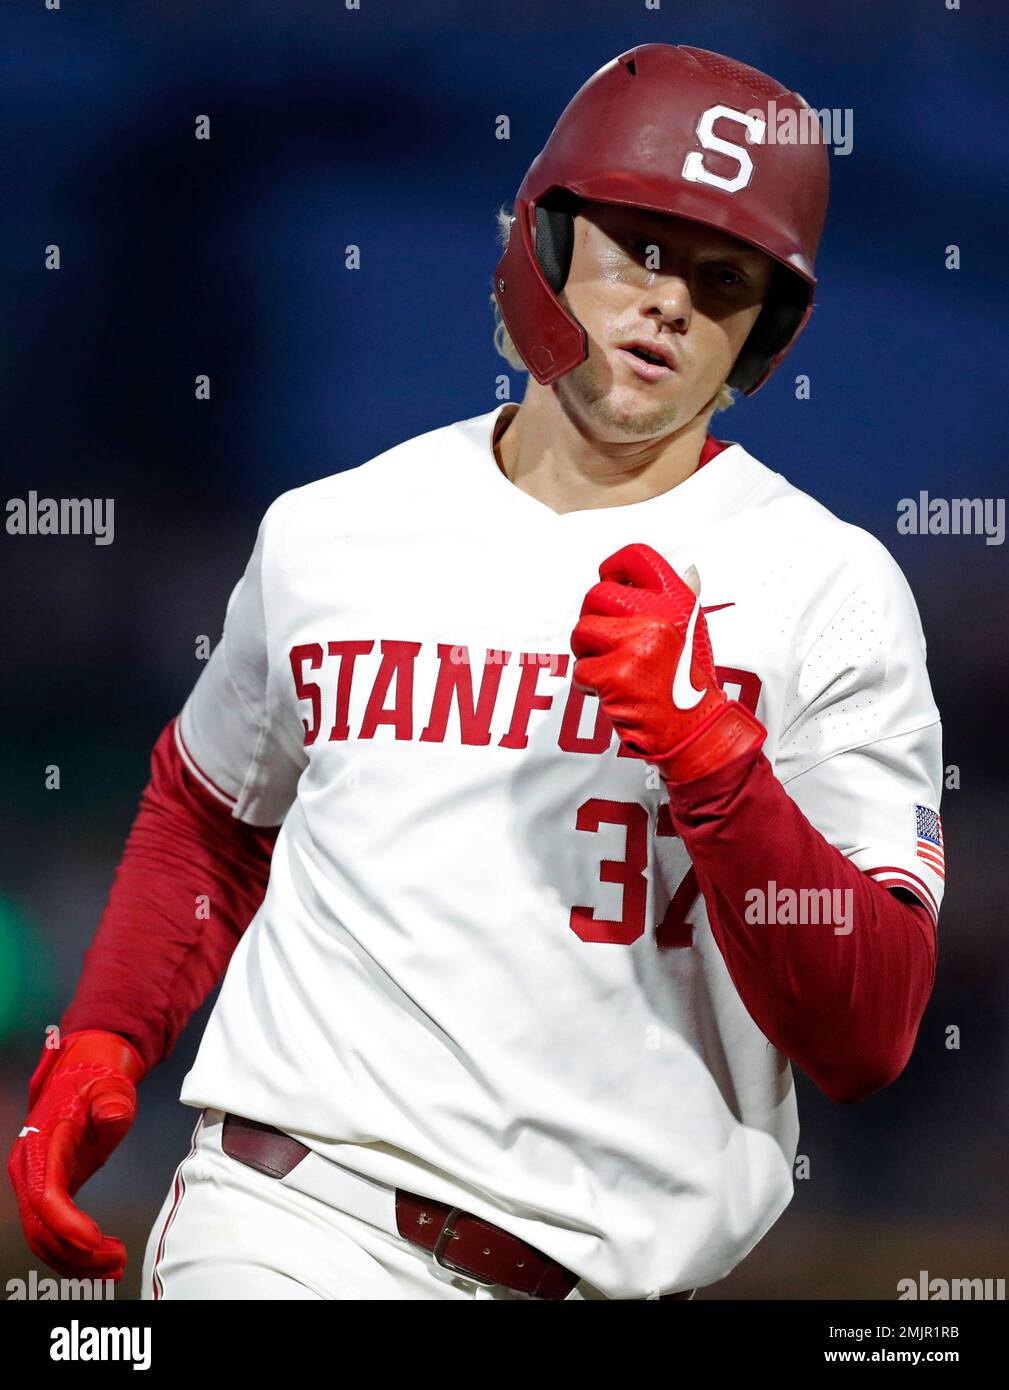 Kyle Stowers - Baseball - Stanford University Athletics